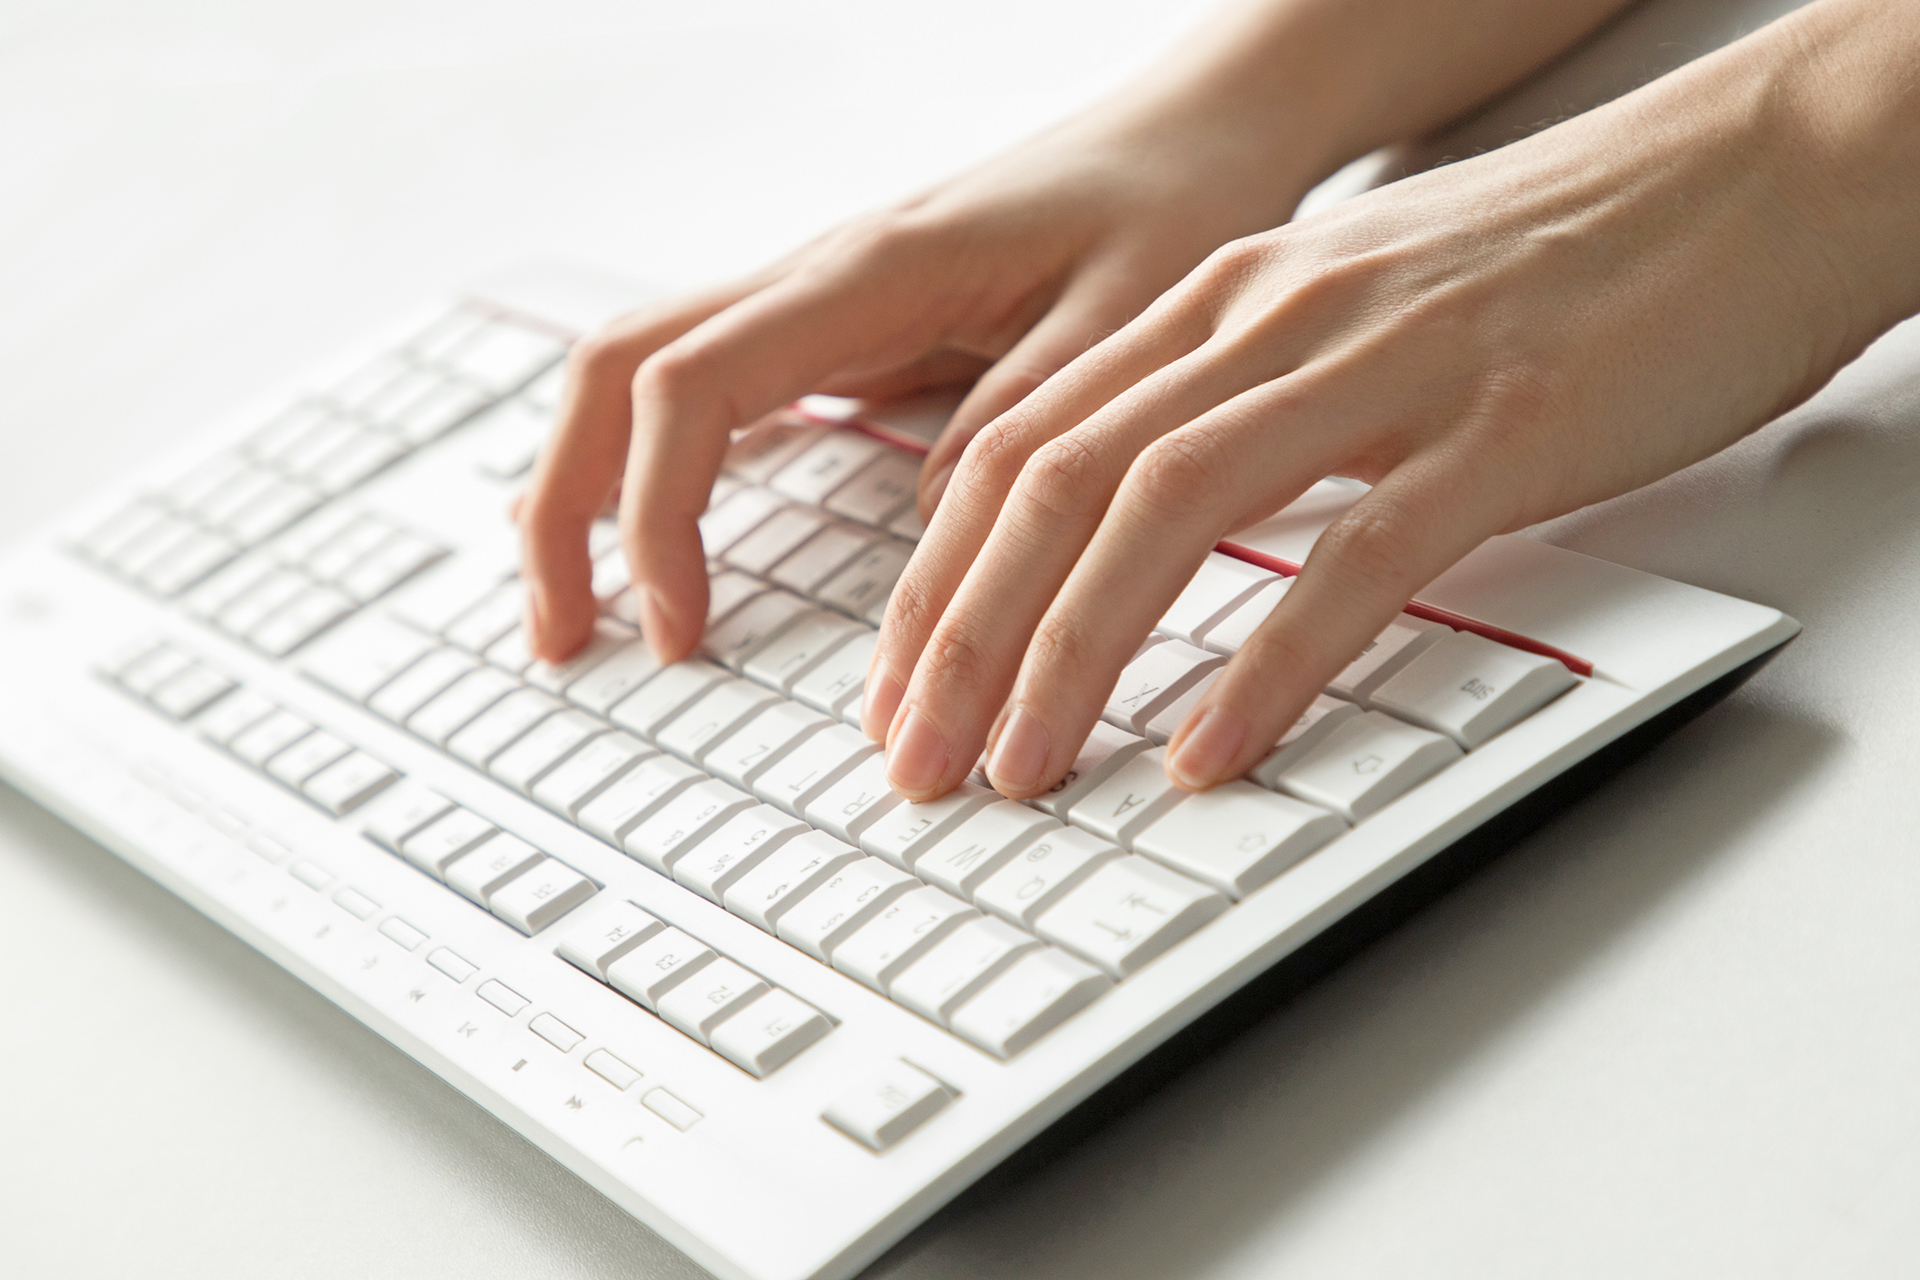 Hands above a keyboard